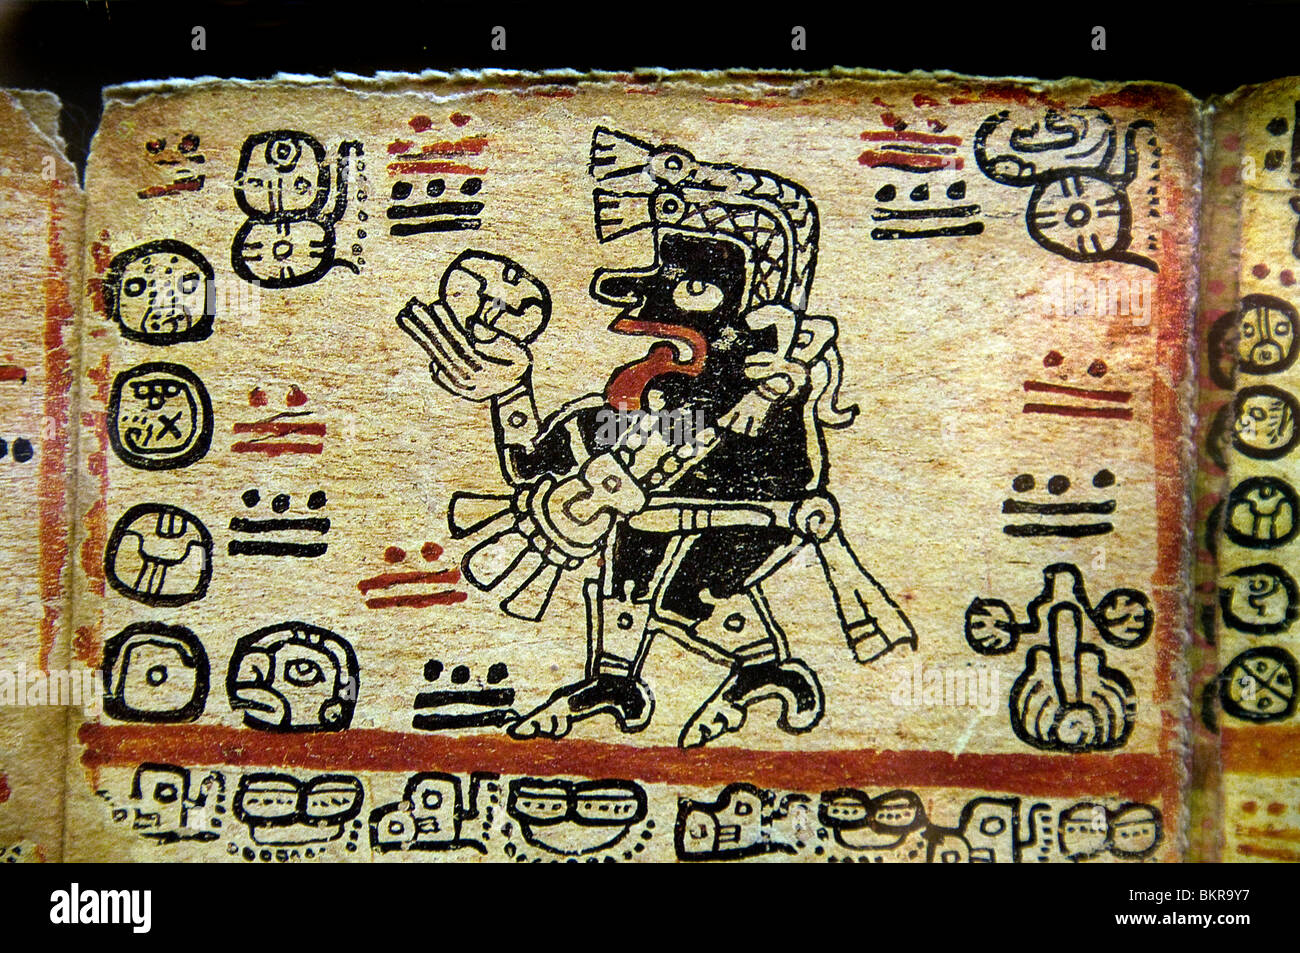 Tro Codex Cortesianus codices Mayas la civilisation Maya précolombien écrit en hiéroglyphes mayas 1250 AD 1500 Banque D'Images